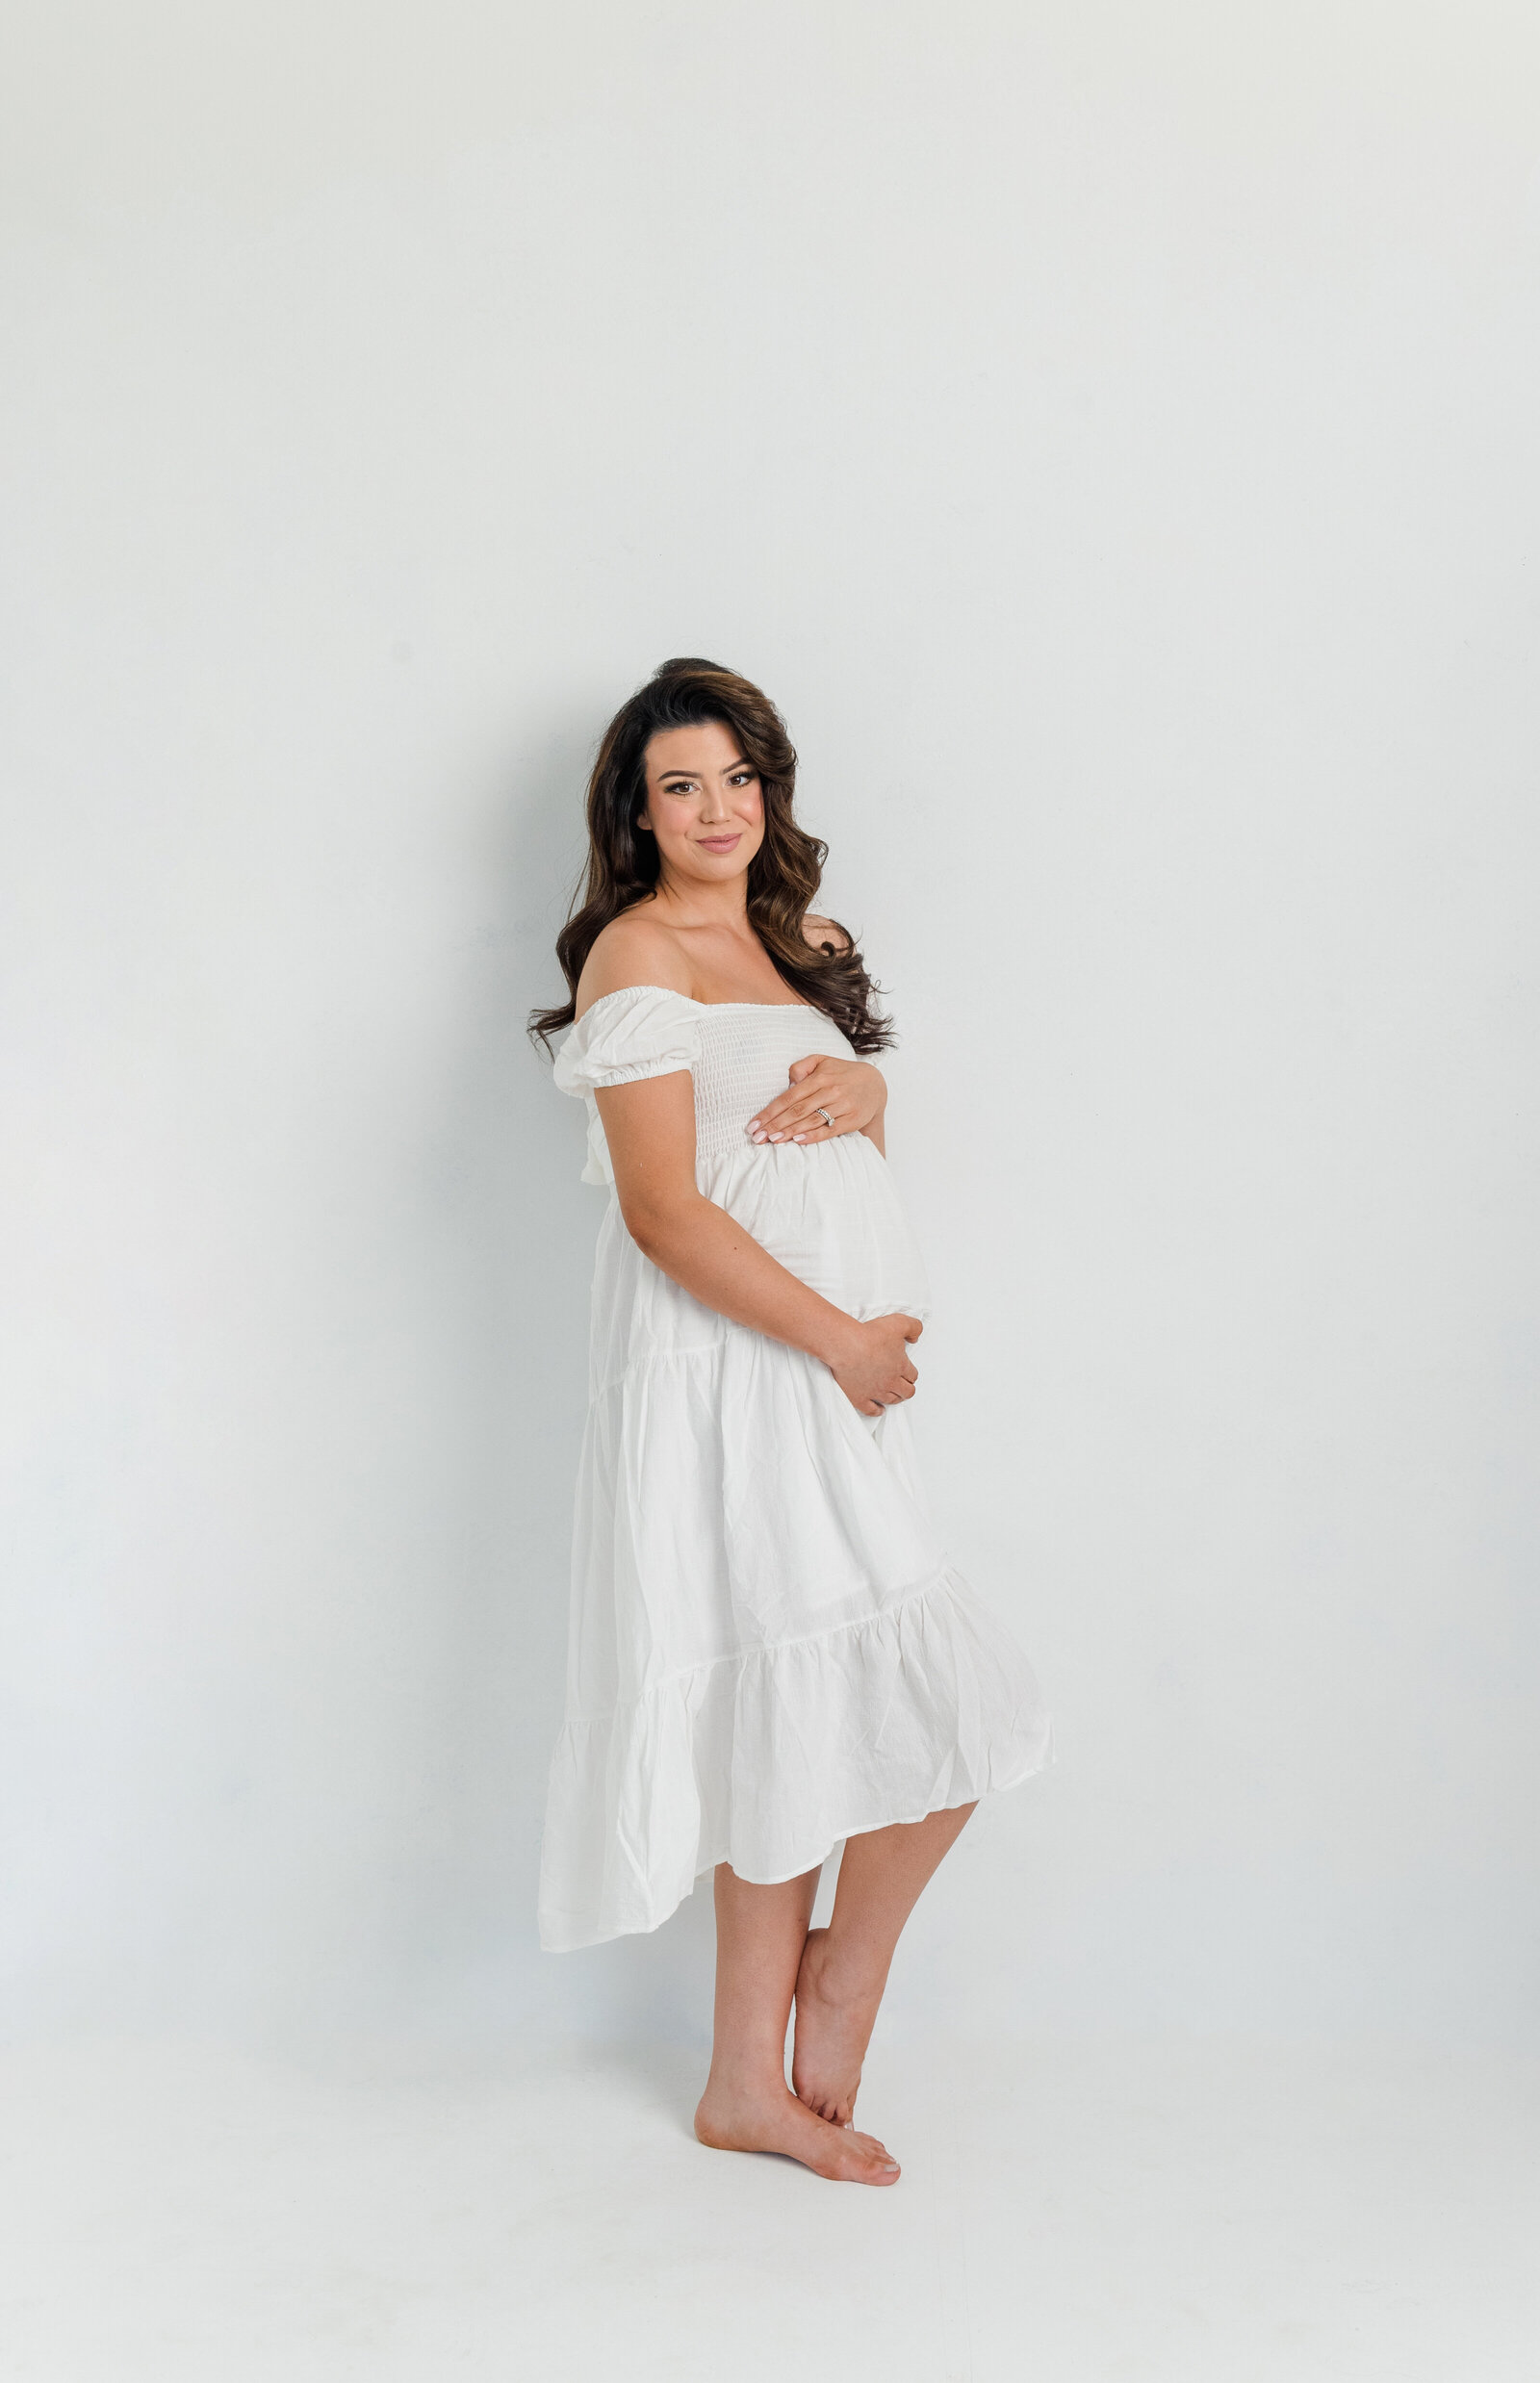 Studio Maternity portrait by Glens Falls Maternity & Newborn Photographer YM Photography